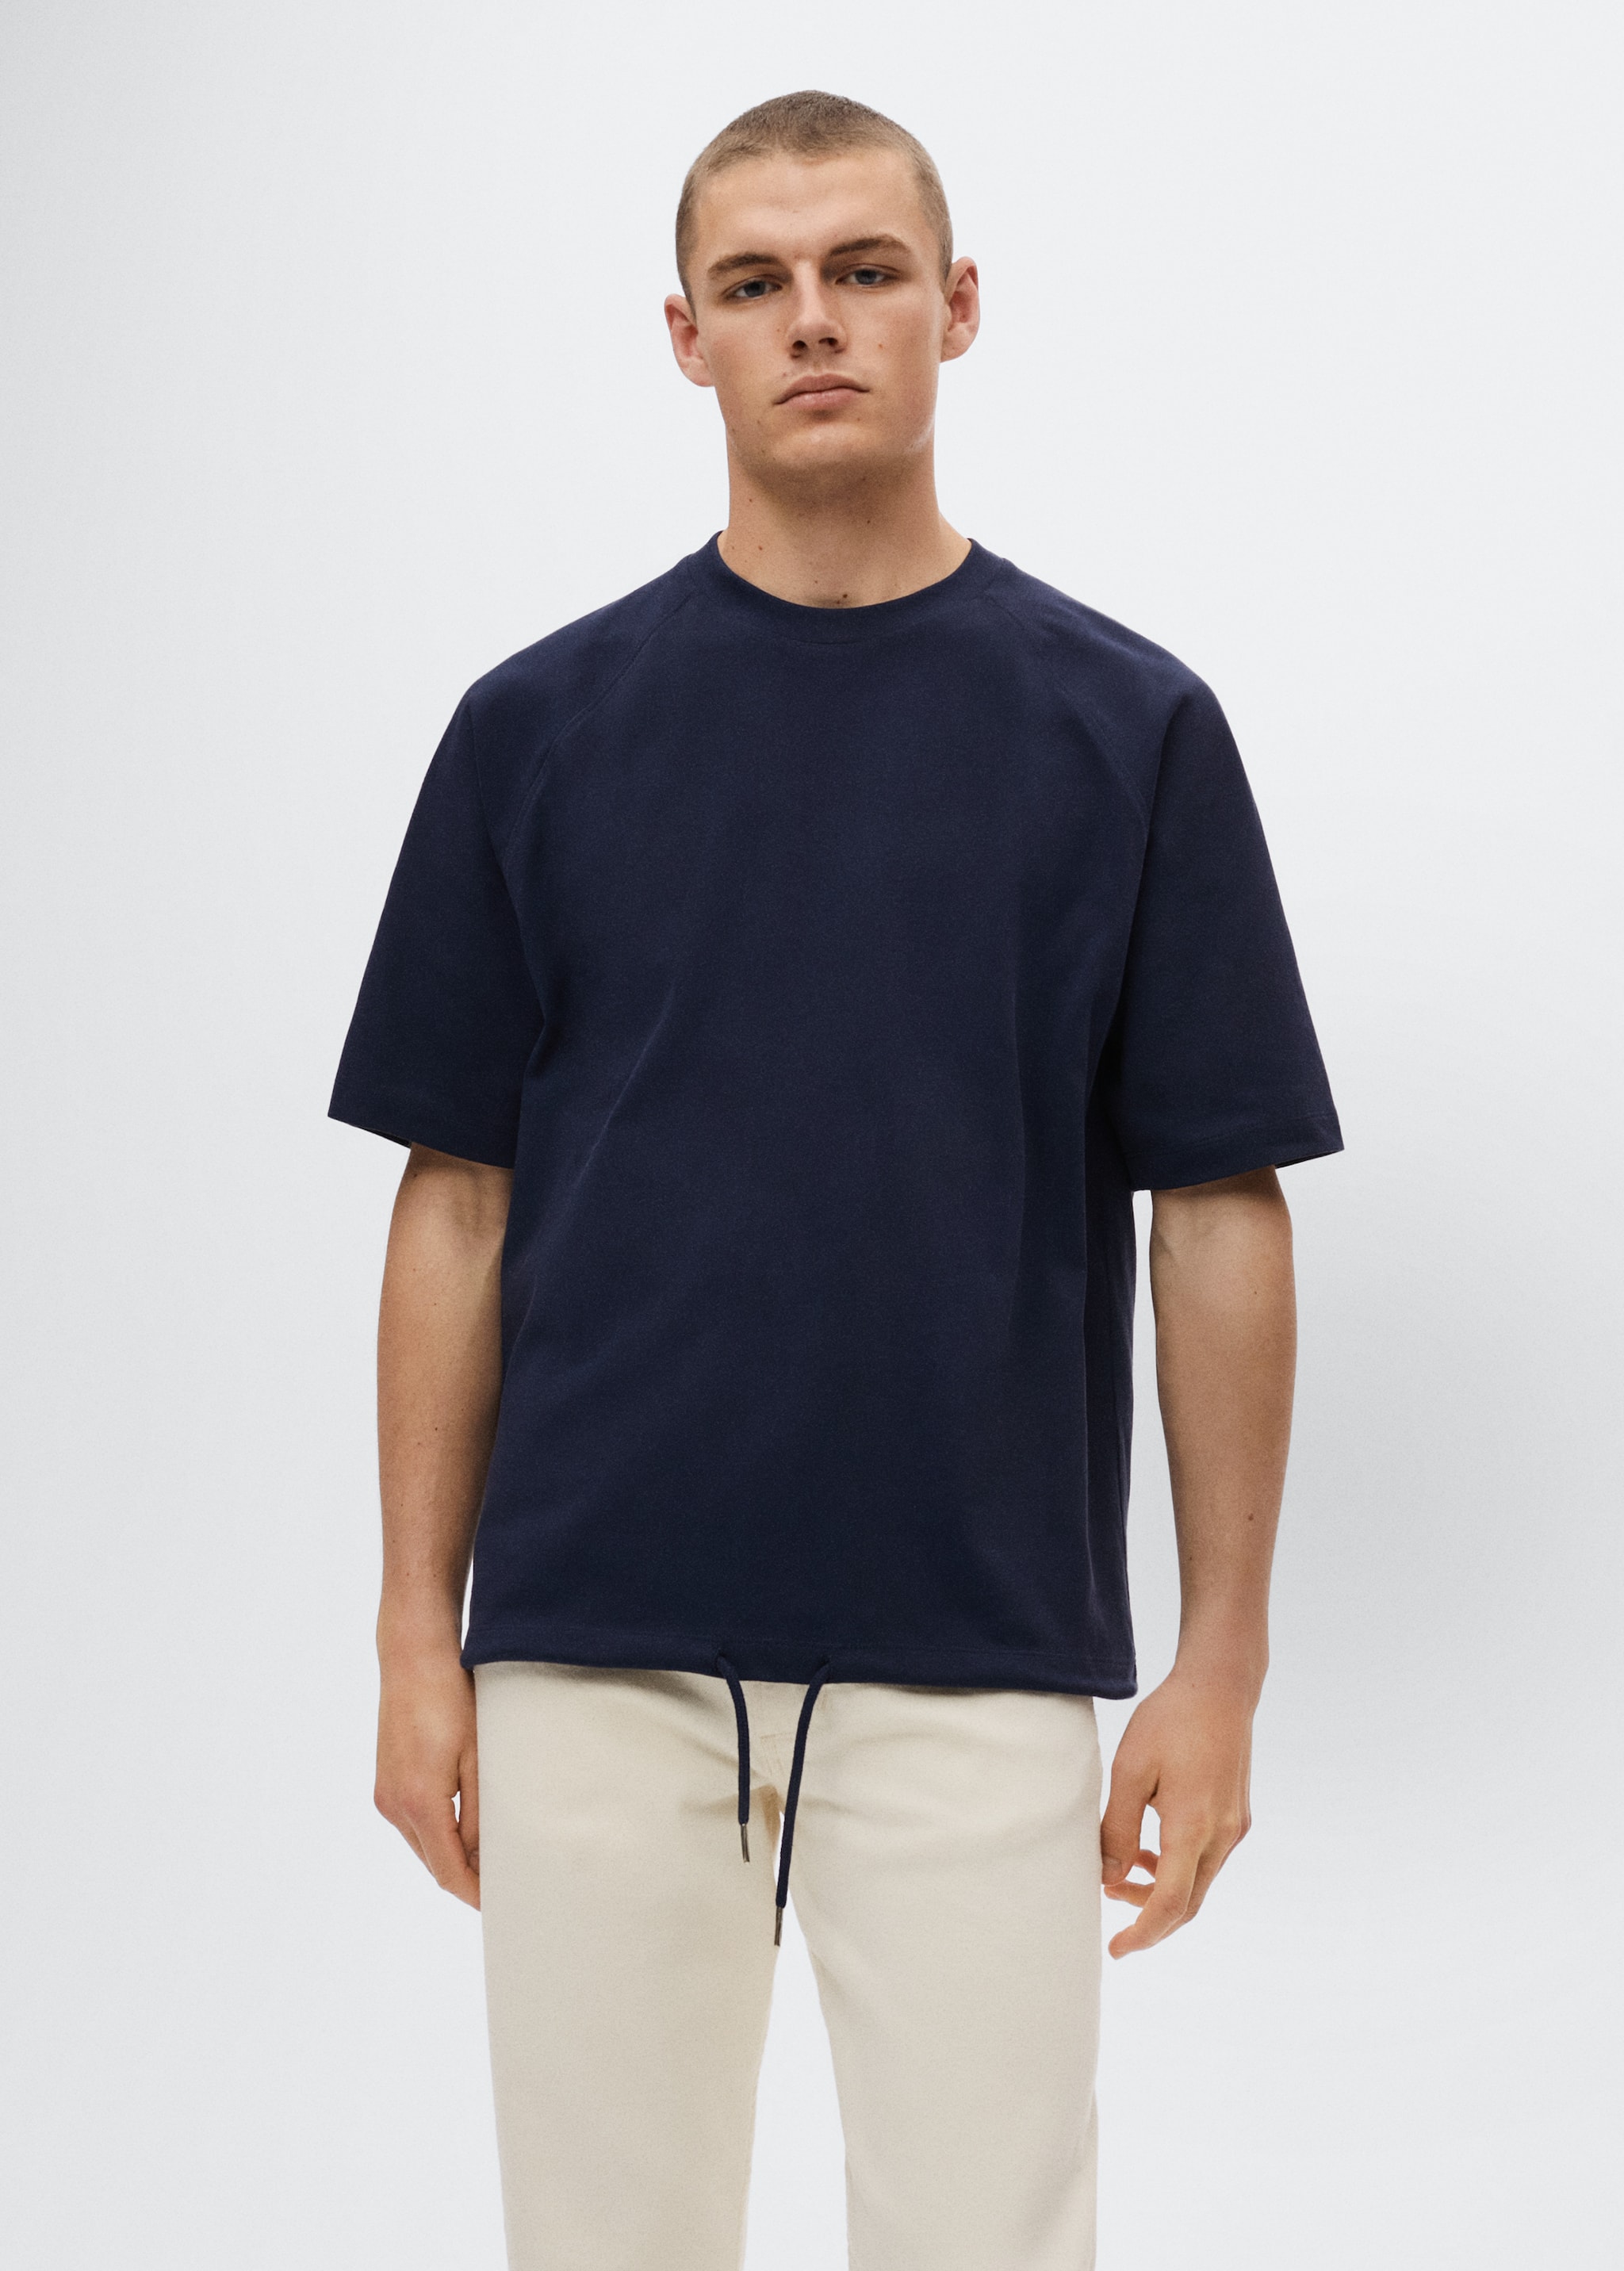 Camiseta algodon cordón - Plano medio